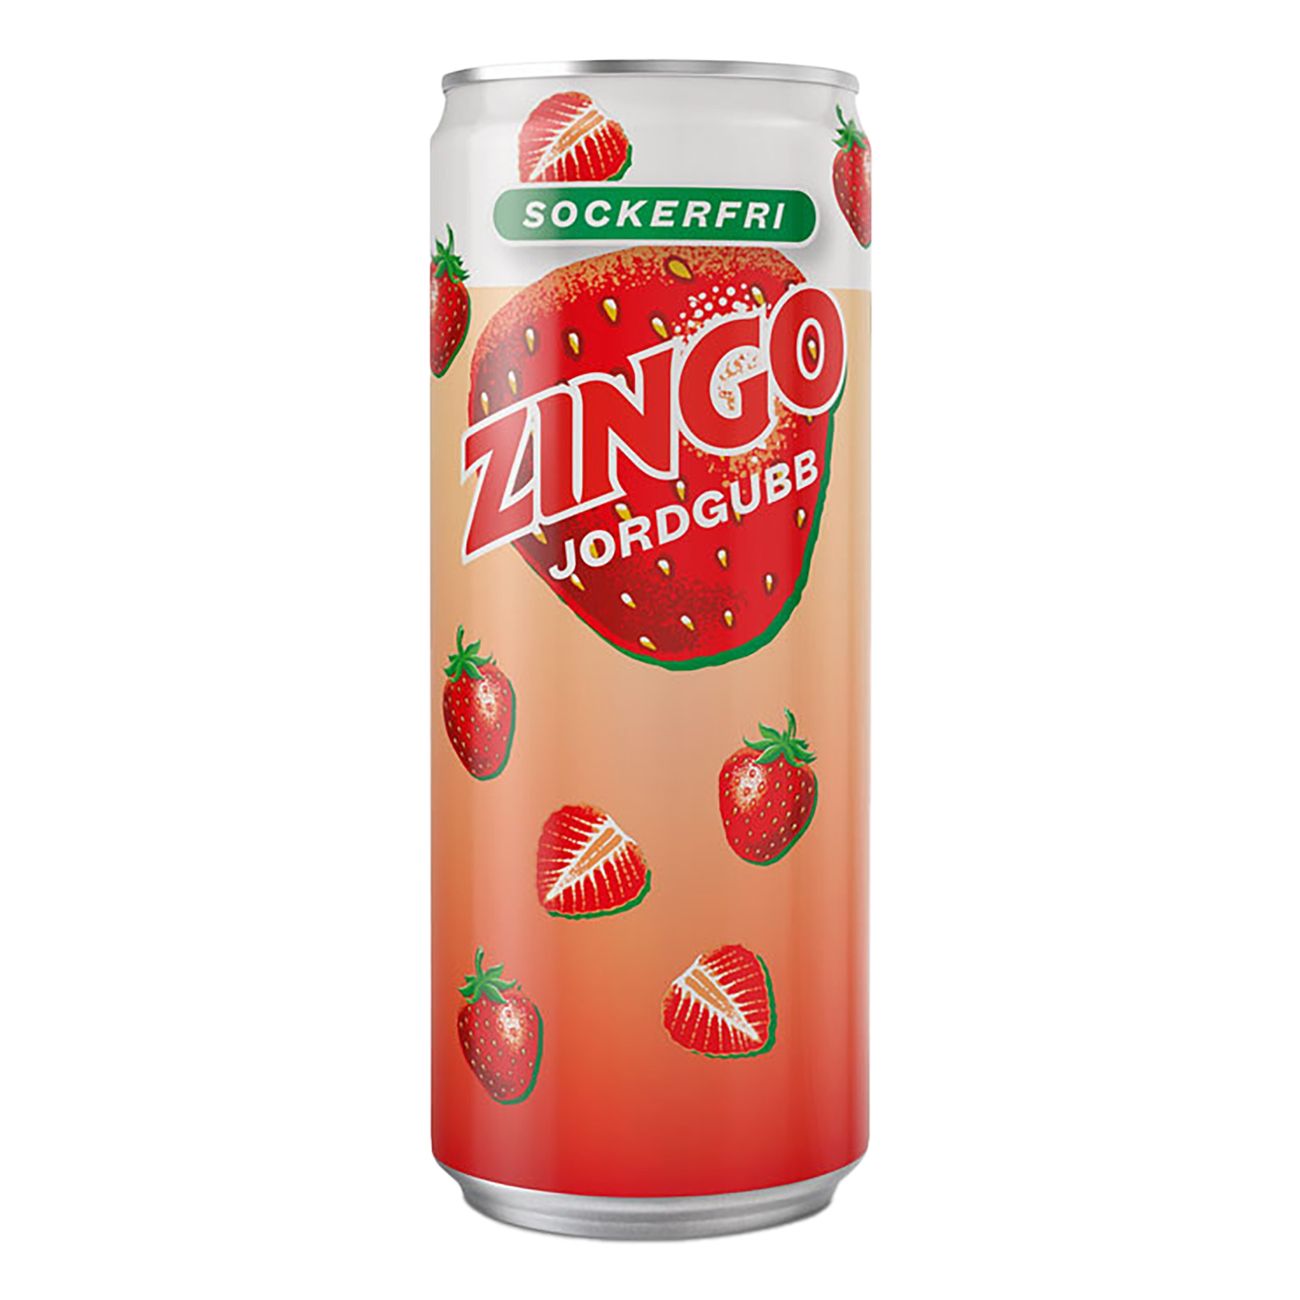 zingo-jordgubb-sockerfri-71637-2